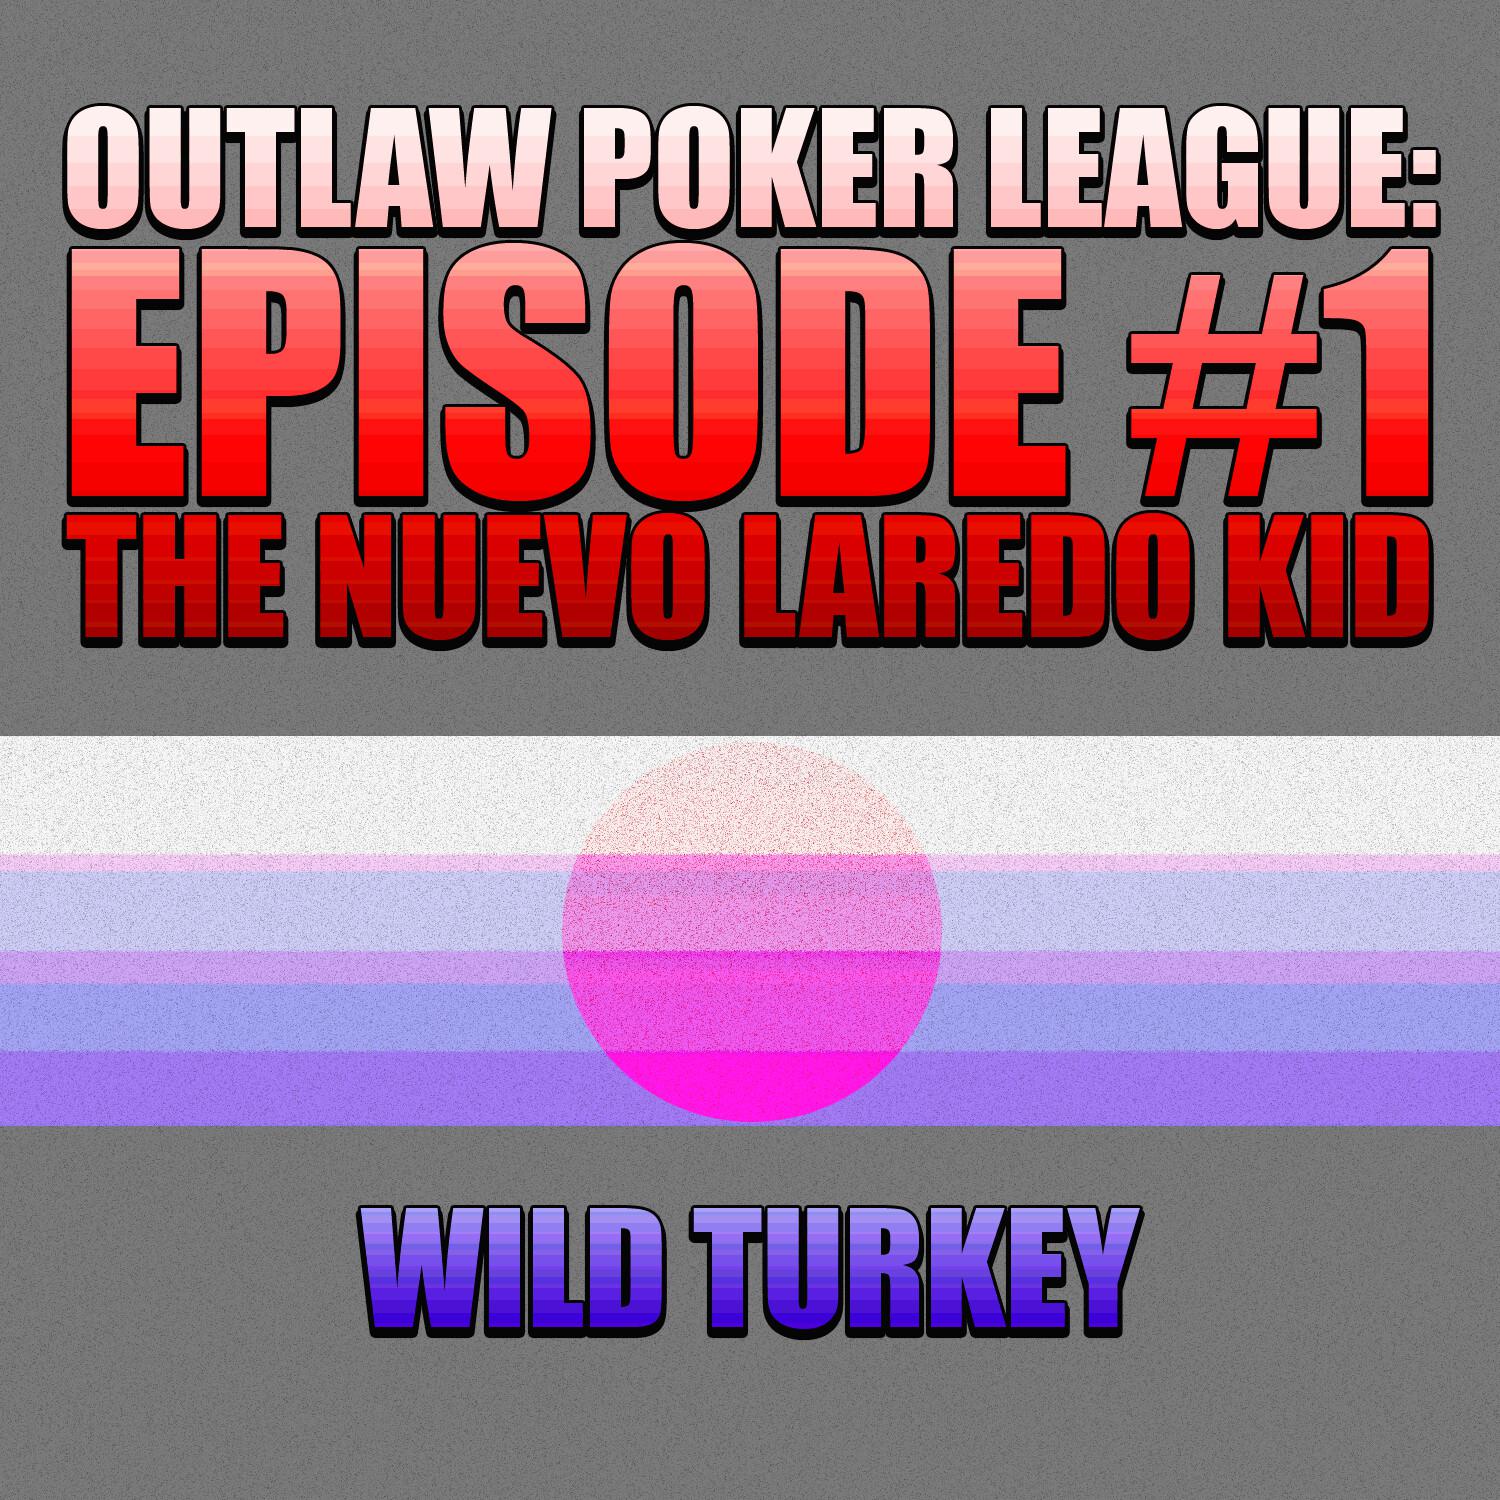 Outlaw Poker League: Episode #1 - The Nuevo Laredo Kid